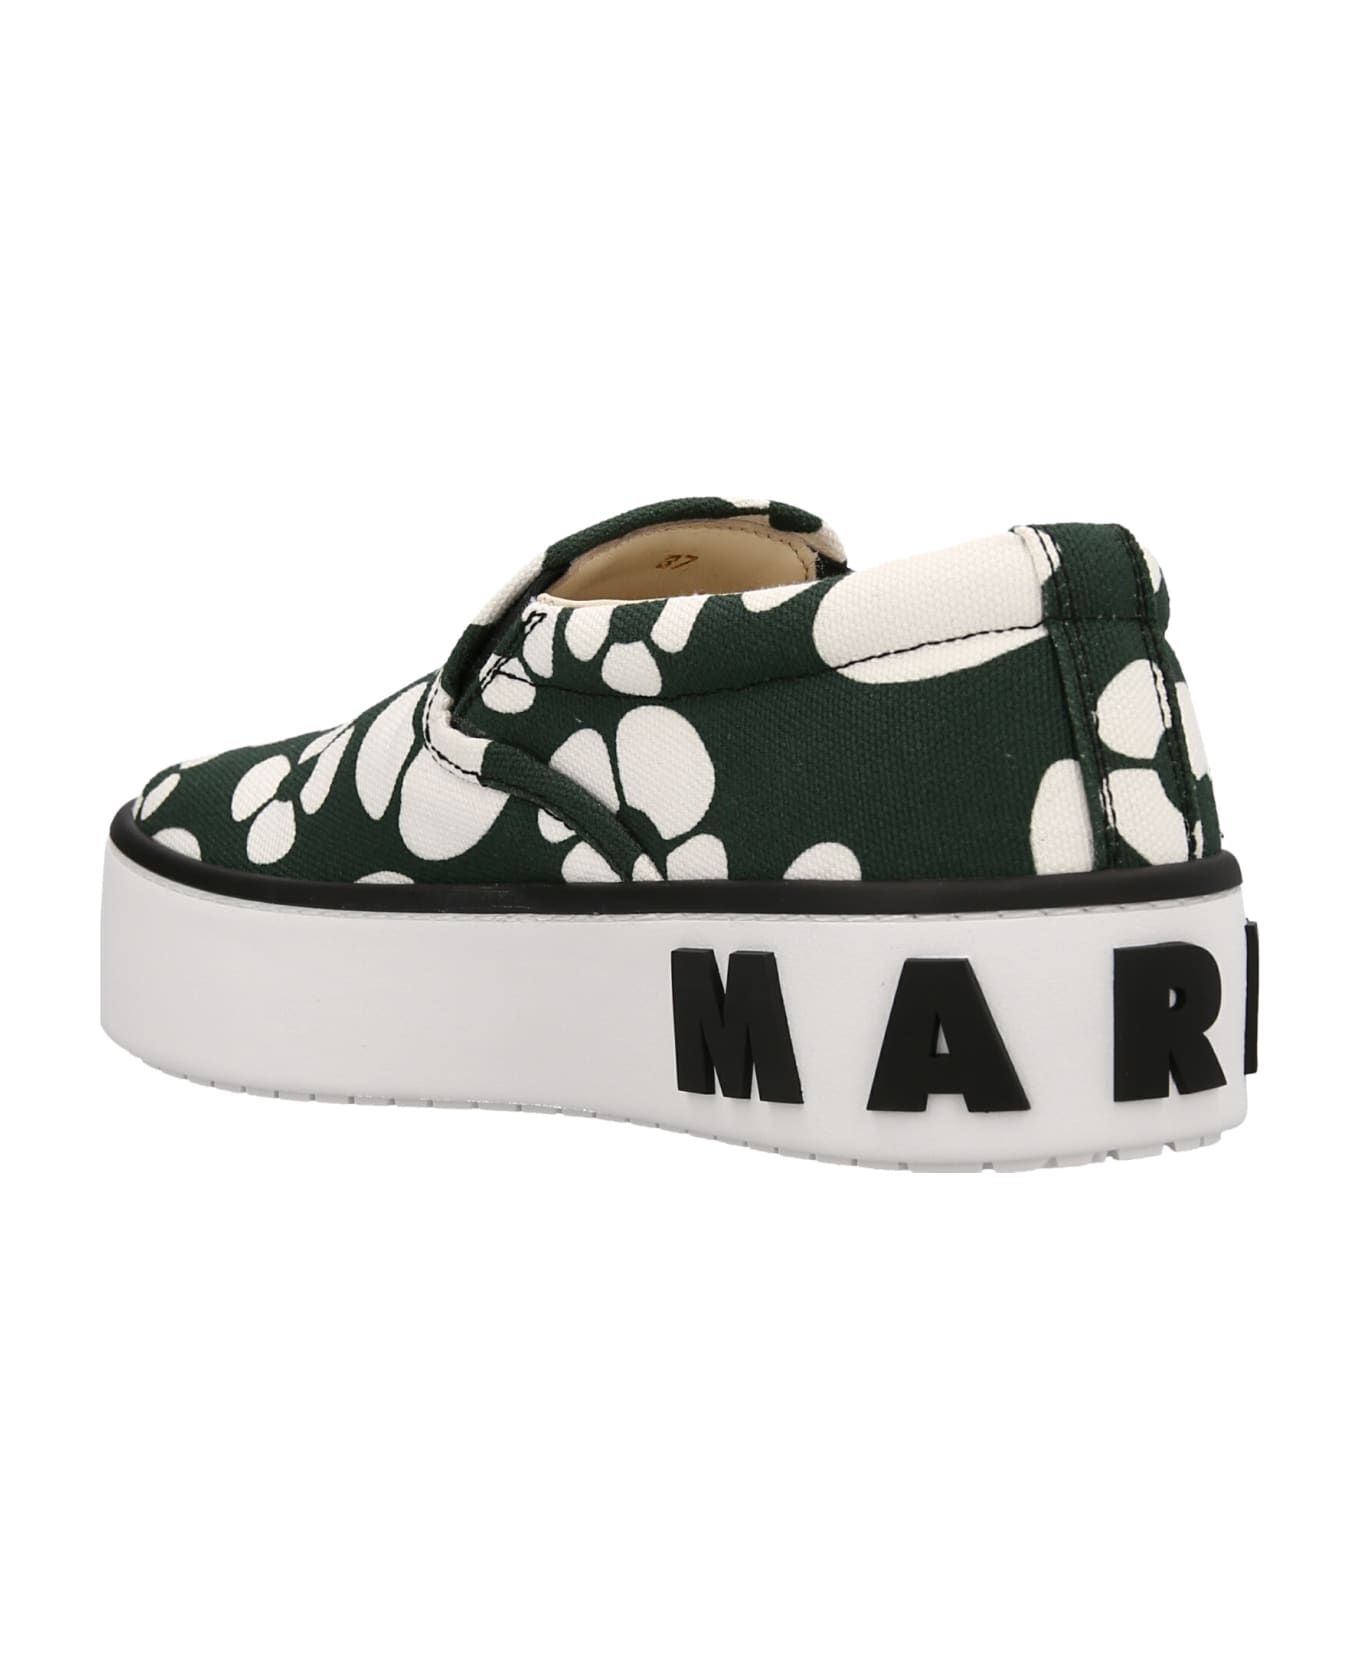 Marni X Cartergovernmentalt Sneakers - Green